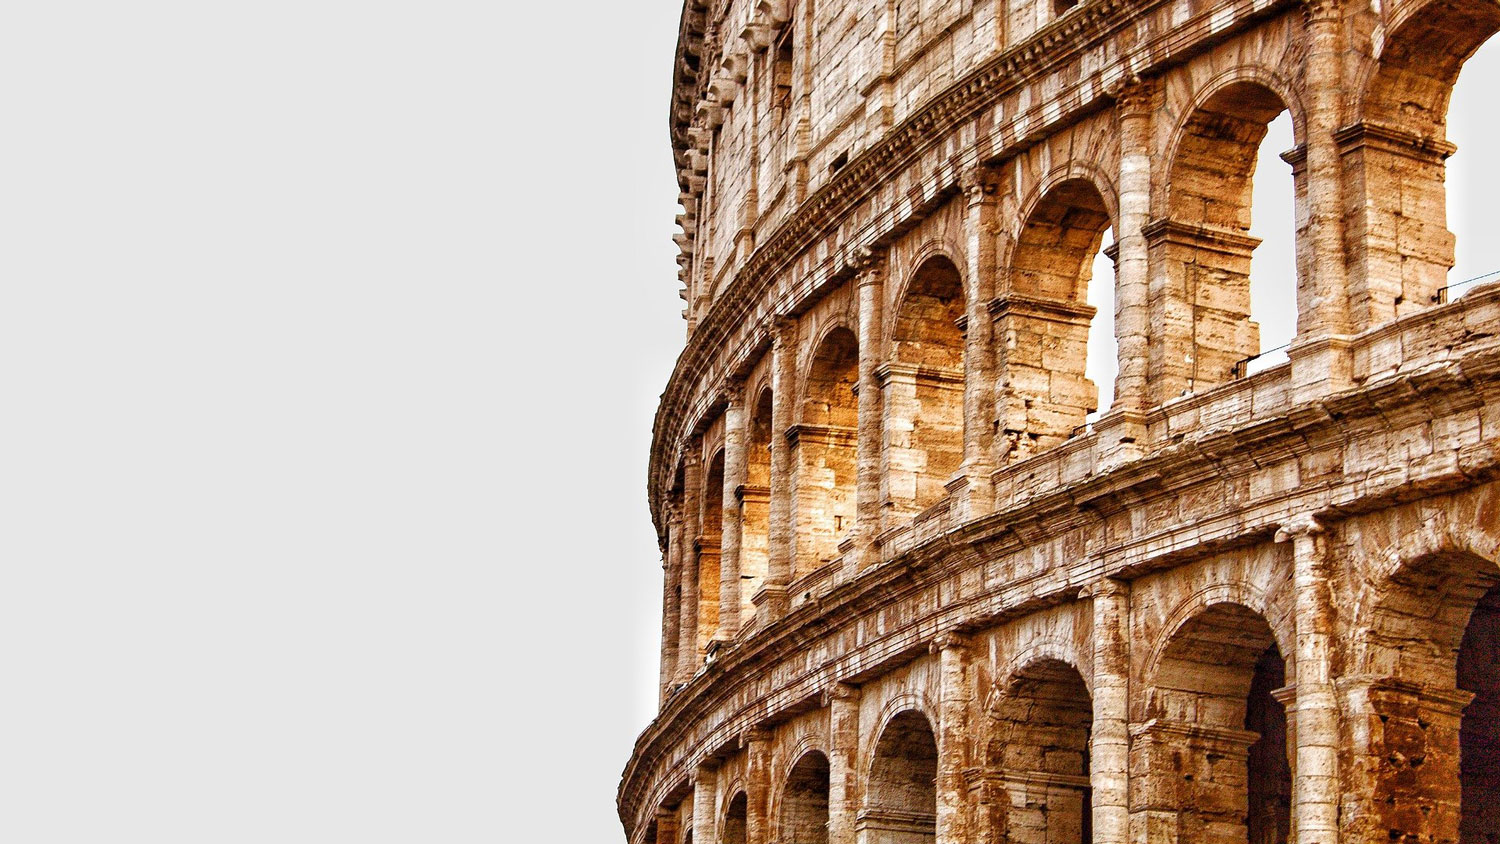 The Roman Colosseum.